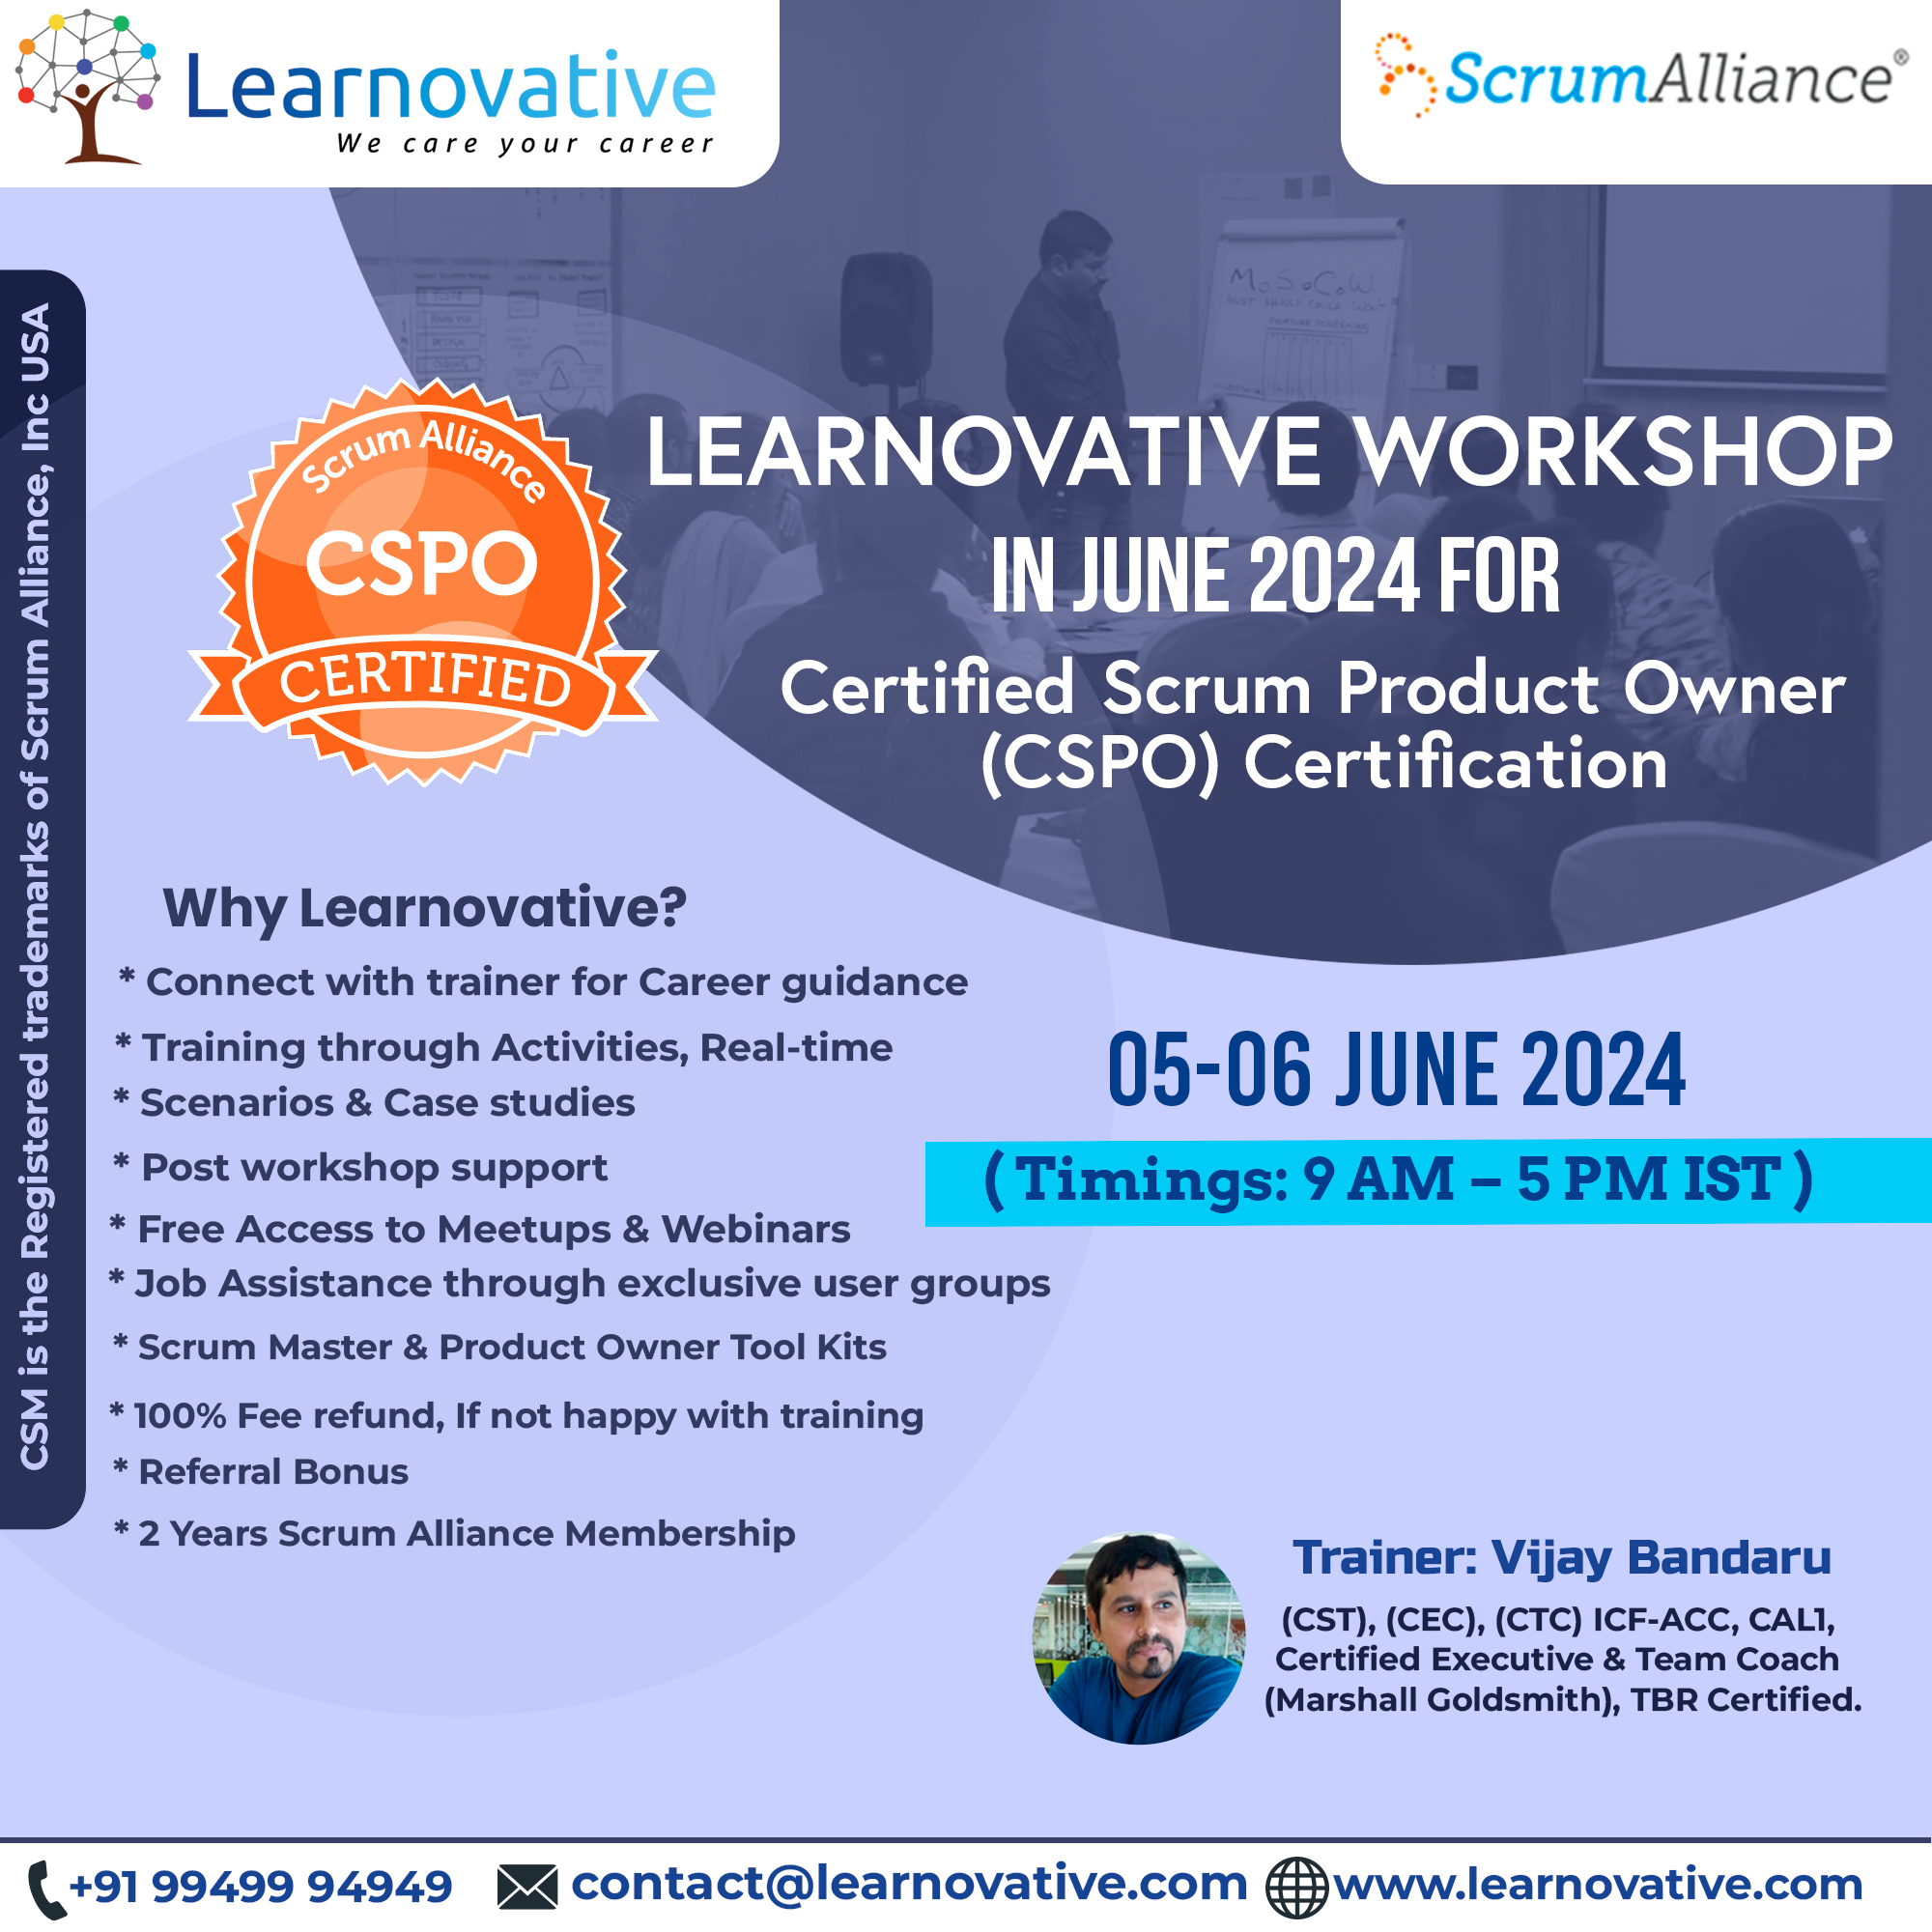 CSPO Certification Live Virtual Classroom (LVC) Online Training Class on 5-6 June 2024 | Learnovative, Online Event